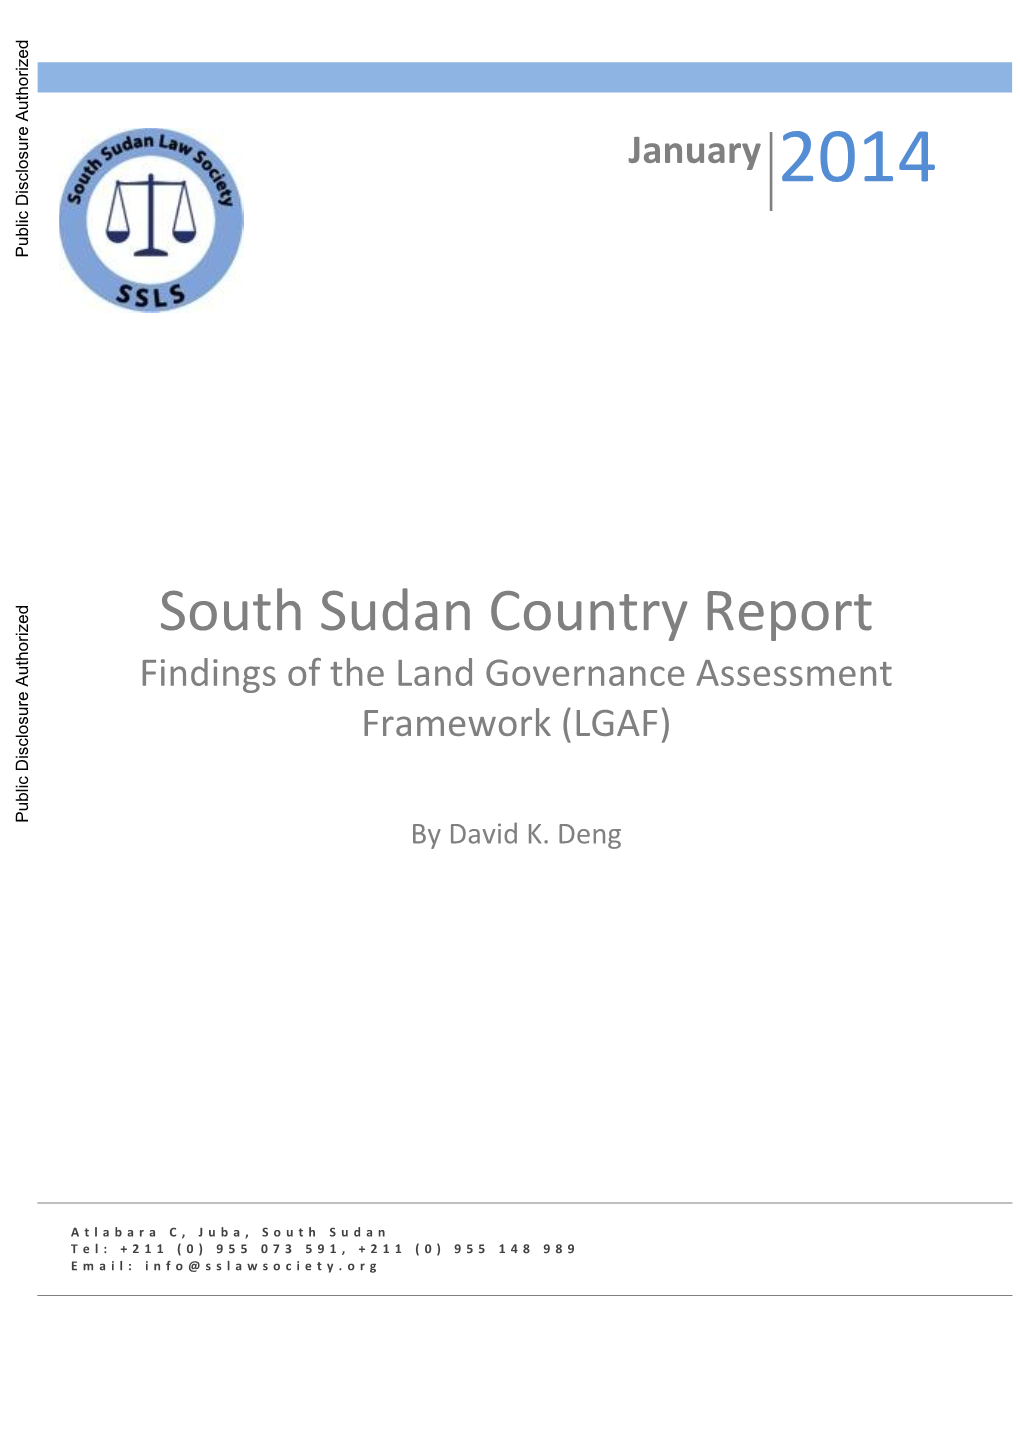 Land Governance Assessment Framework (LGAF)